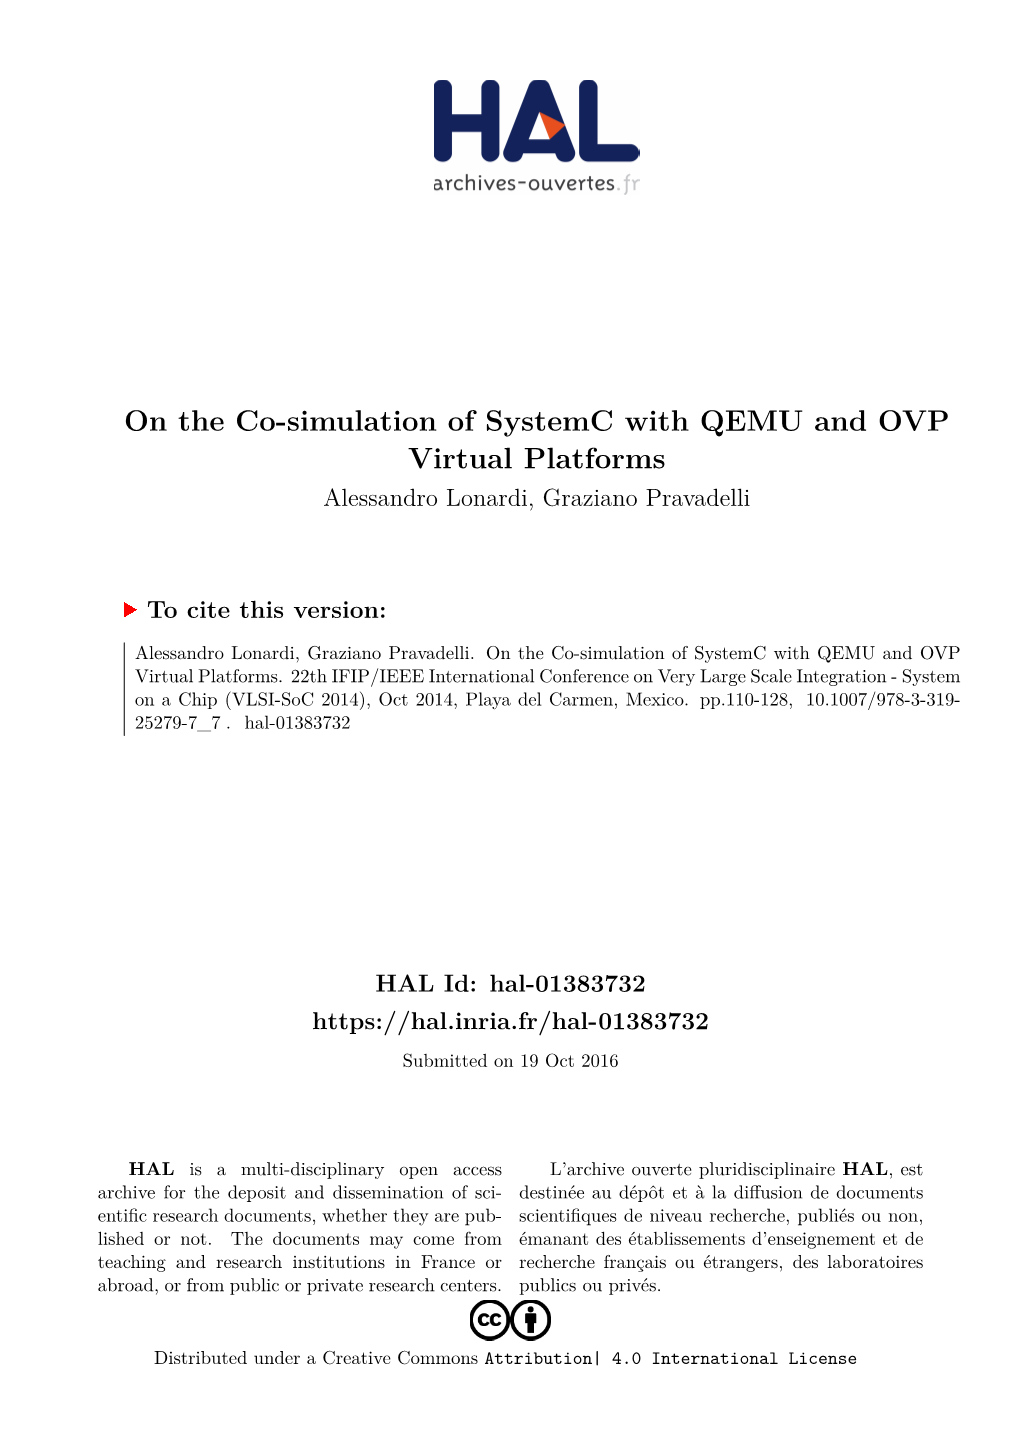 On the Co-Simulation of Systemc with QEMU and OVP Virtual Platforms Alessandro Lonardi, Graziano Pravadelli